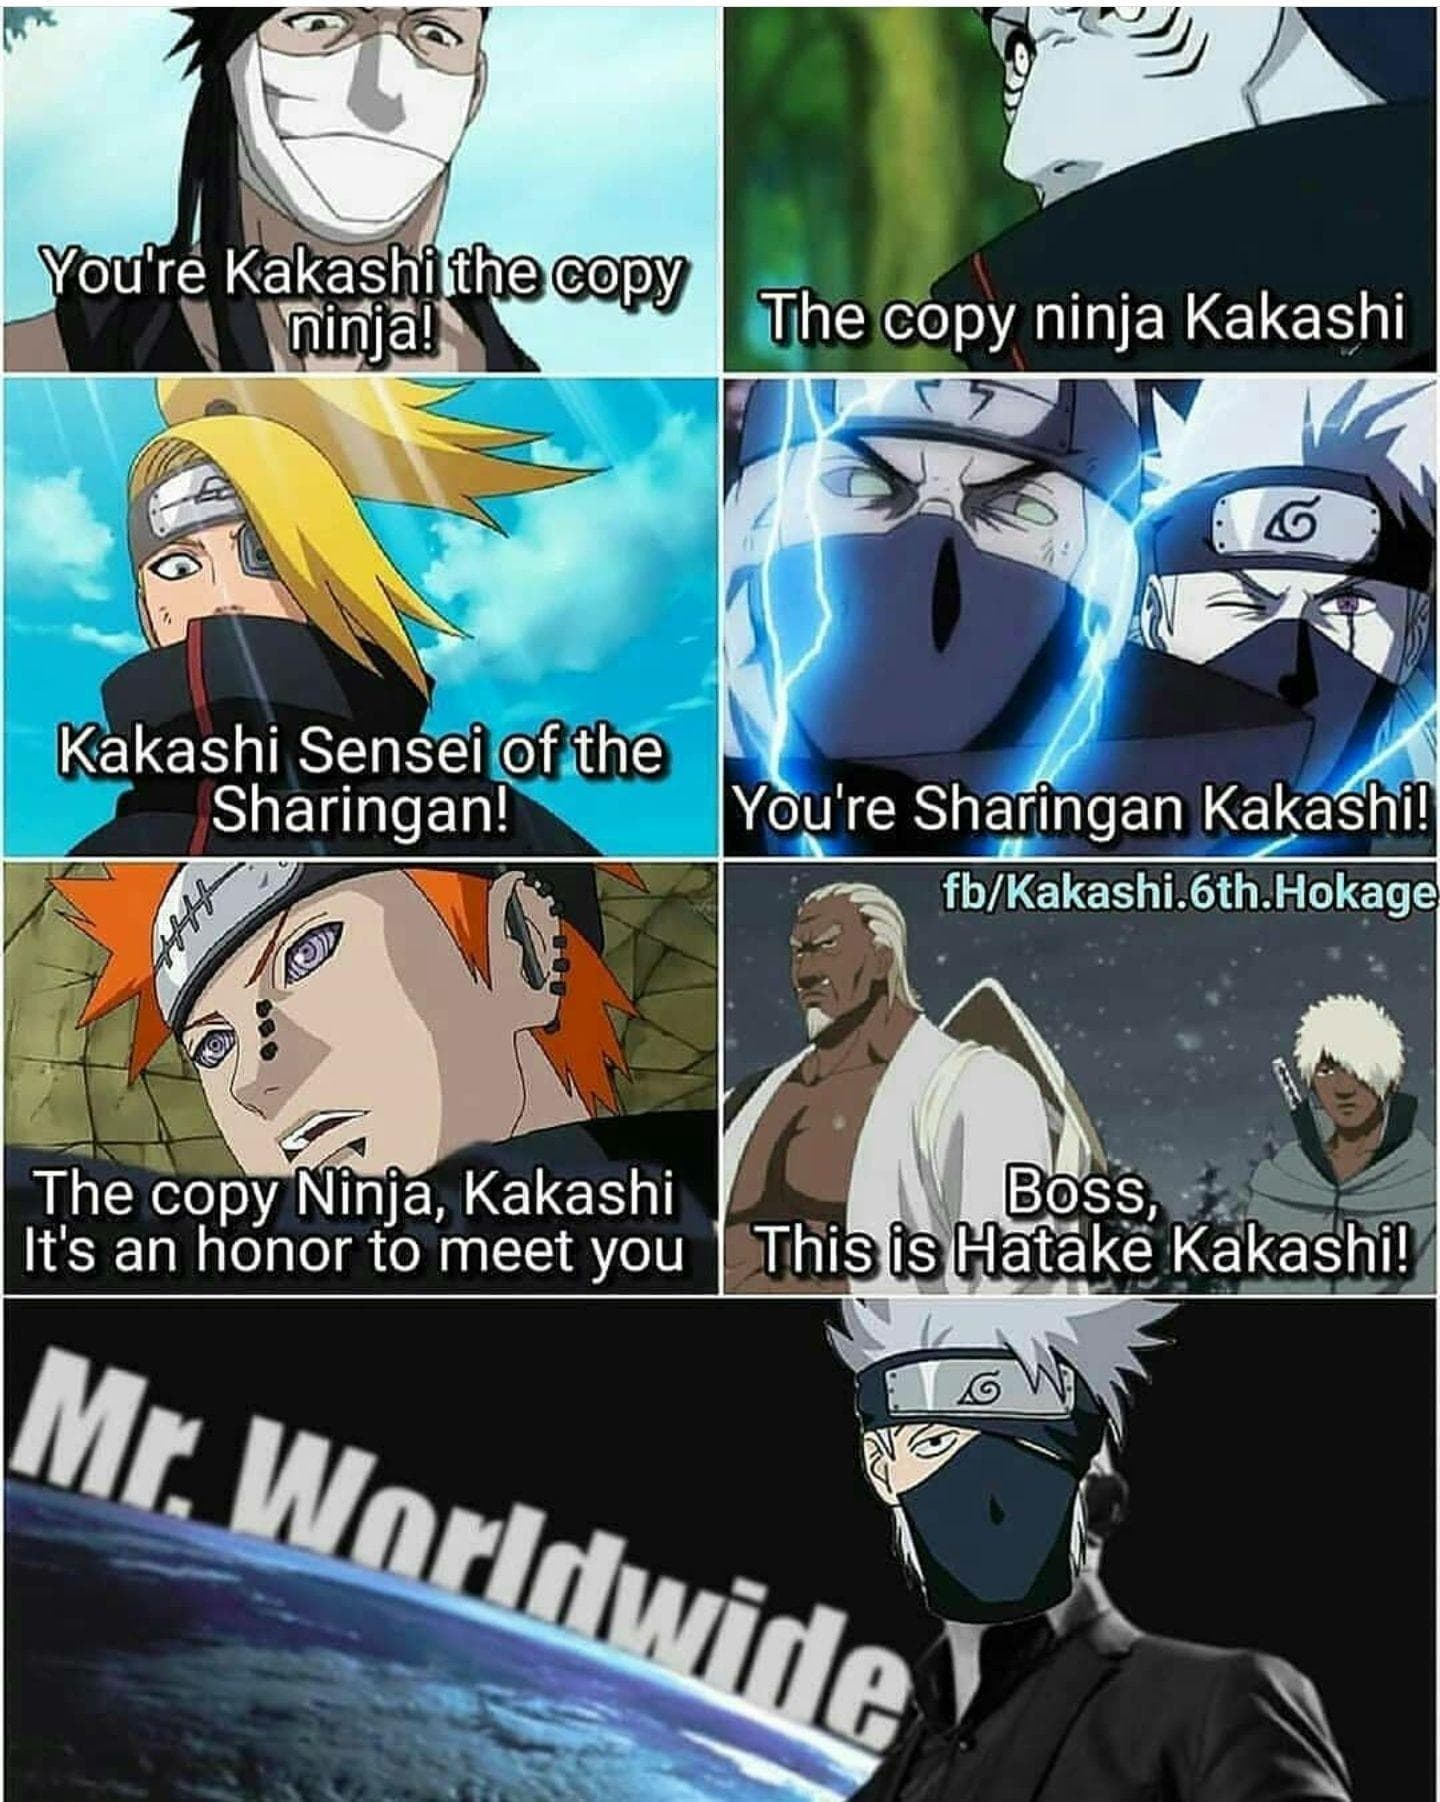 Random Hilarious Kakashi Memes That Prove He's Ultimate Uchiha